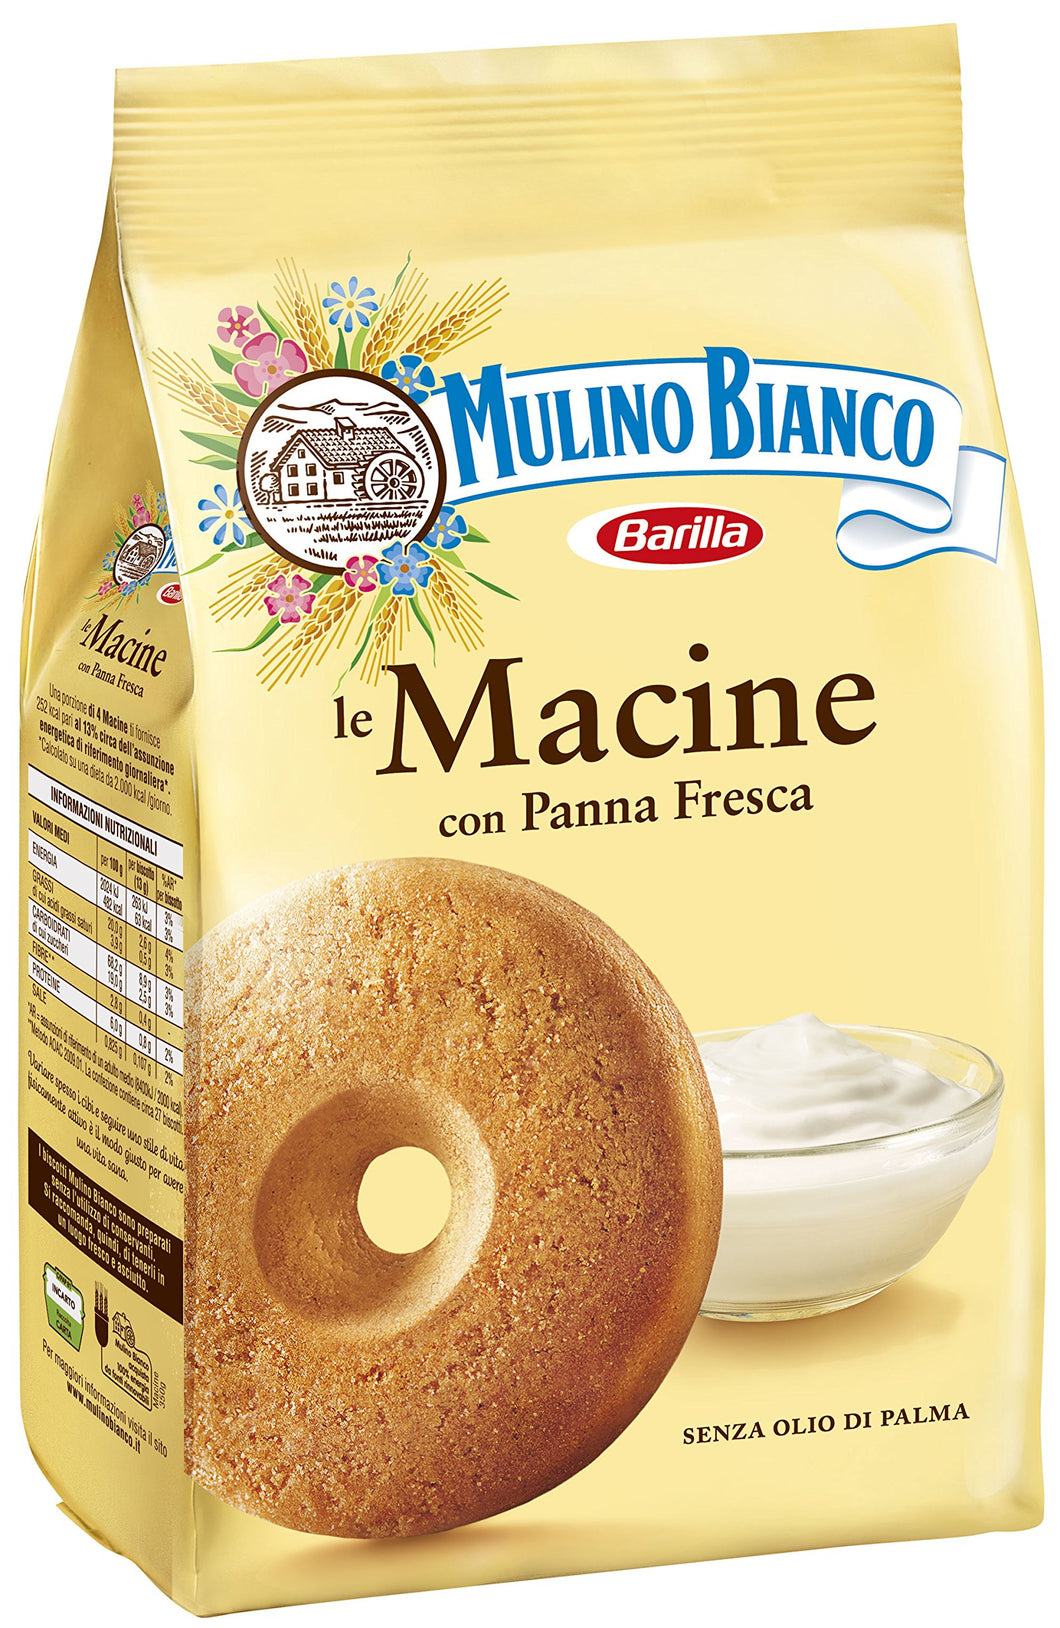 Mulino Bianco Macine Biscuits 350g Meats & Eats